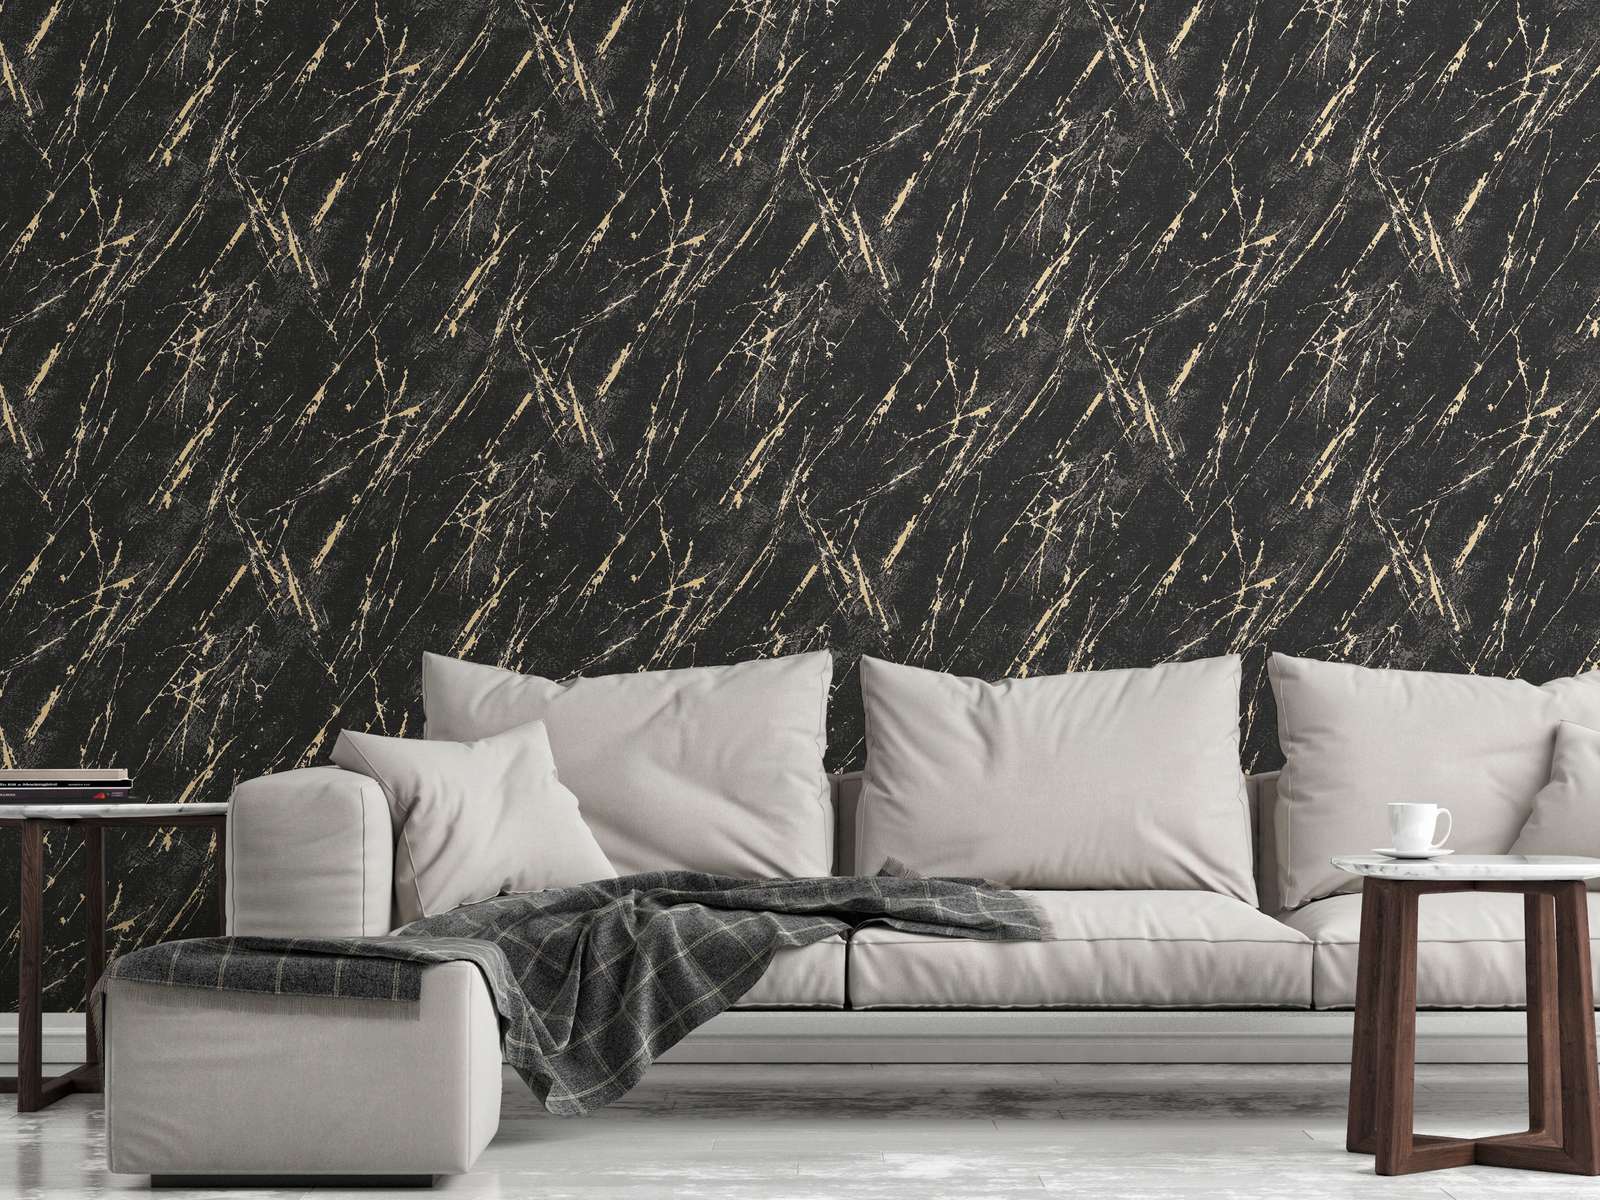             Non-woven wallpaper in plaster look with golden details - black, gold, metallic
        